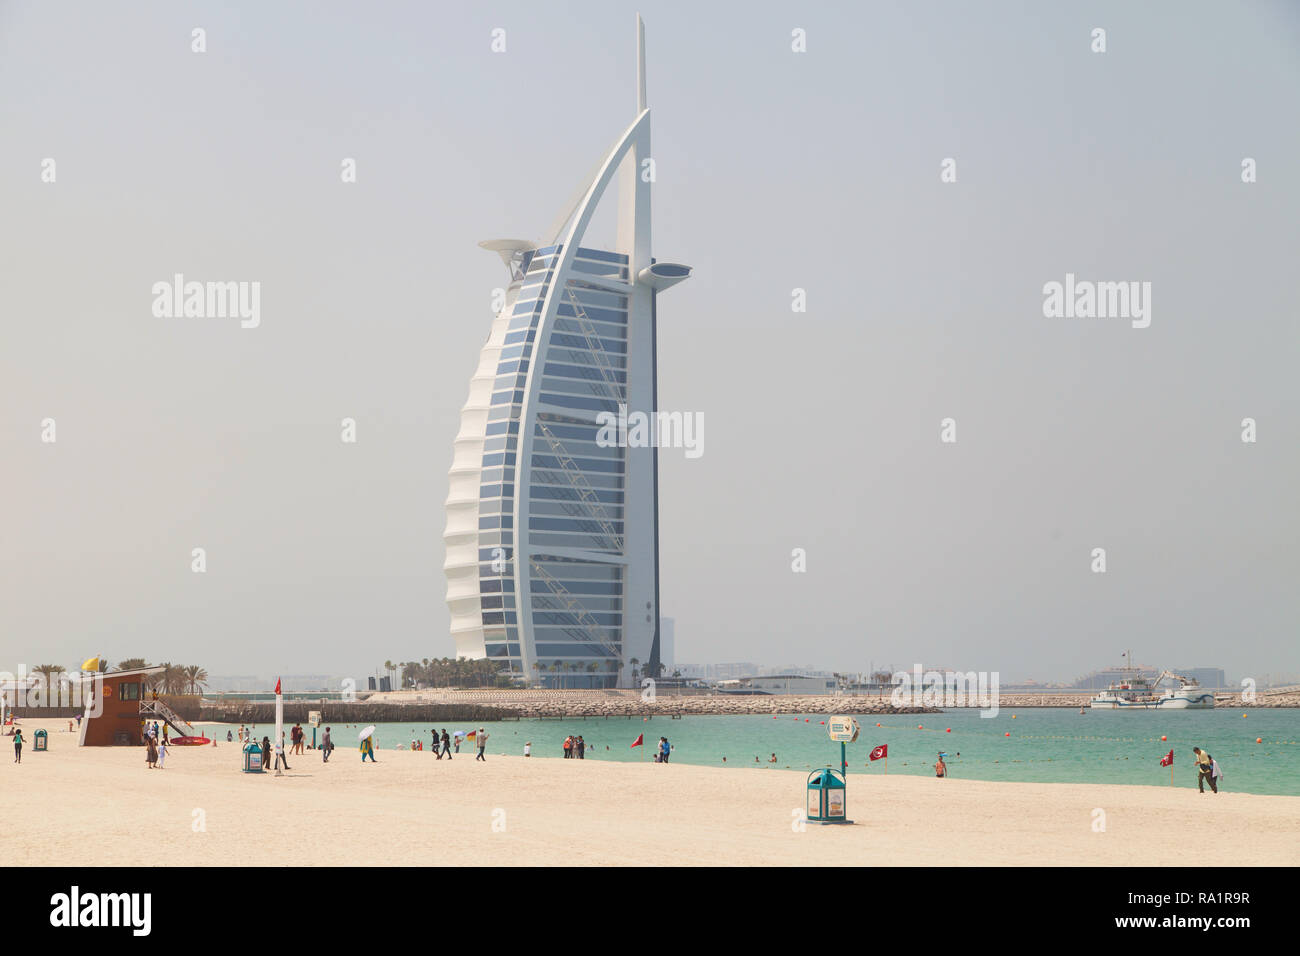 Dubai, United Arab Emirates - September 8, 2018: Jumeirah Beach and Burj Al Arab on September 8, 2018 in Dubai, United Arab Emirates. Stock Photo